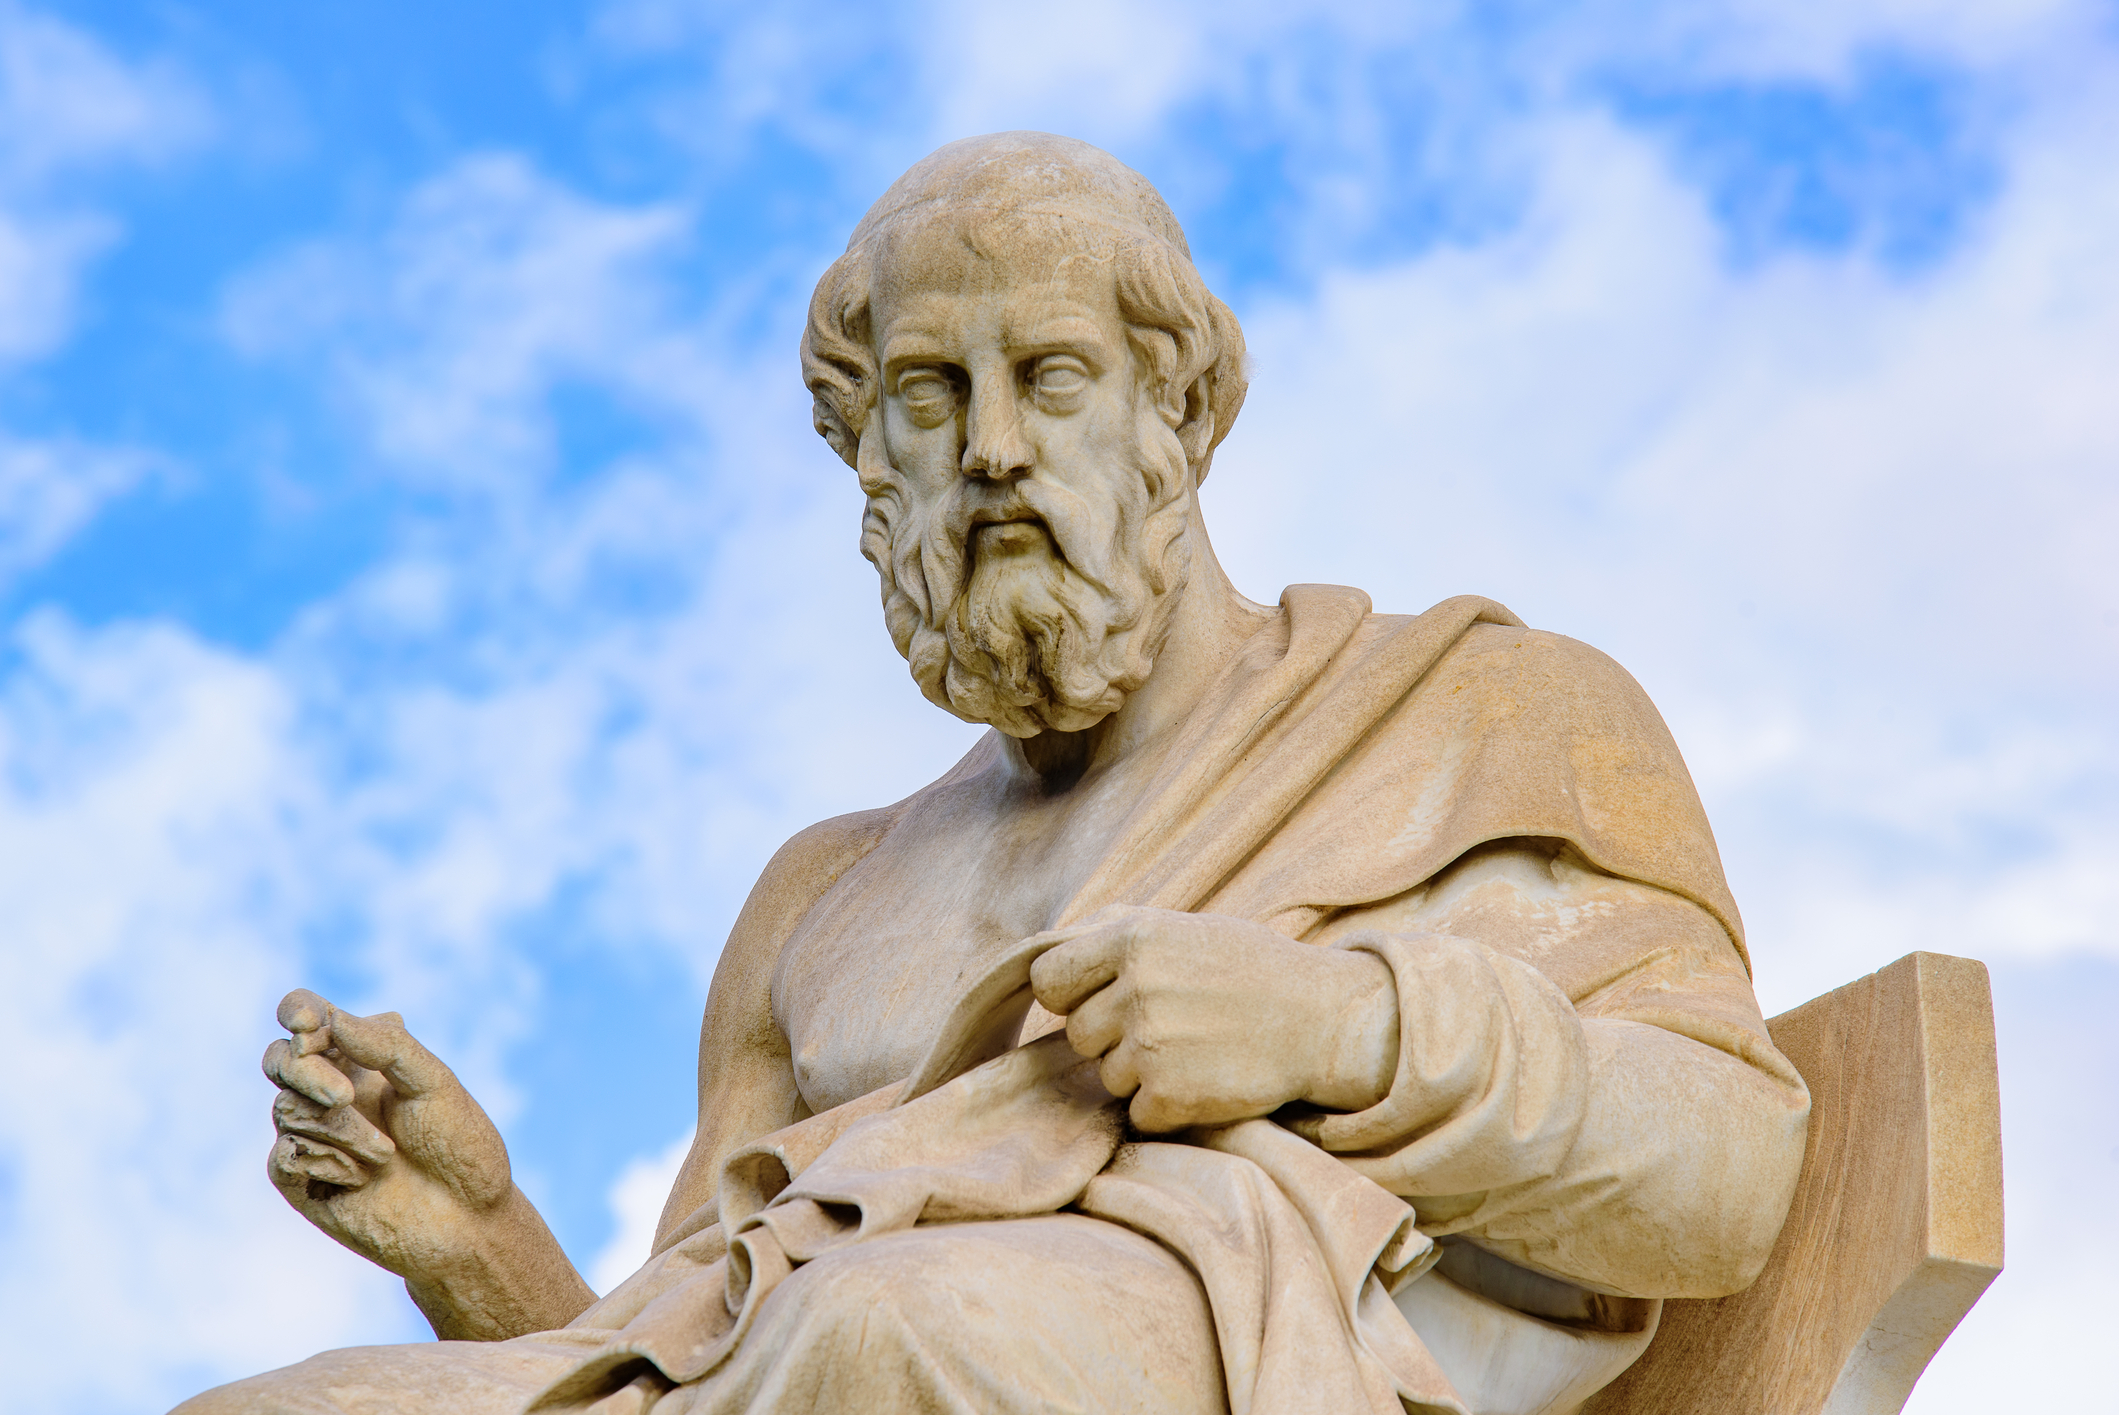 Plato on Women – Episode 4